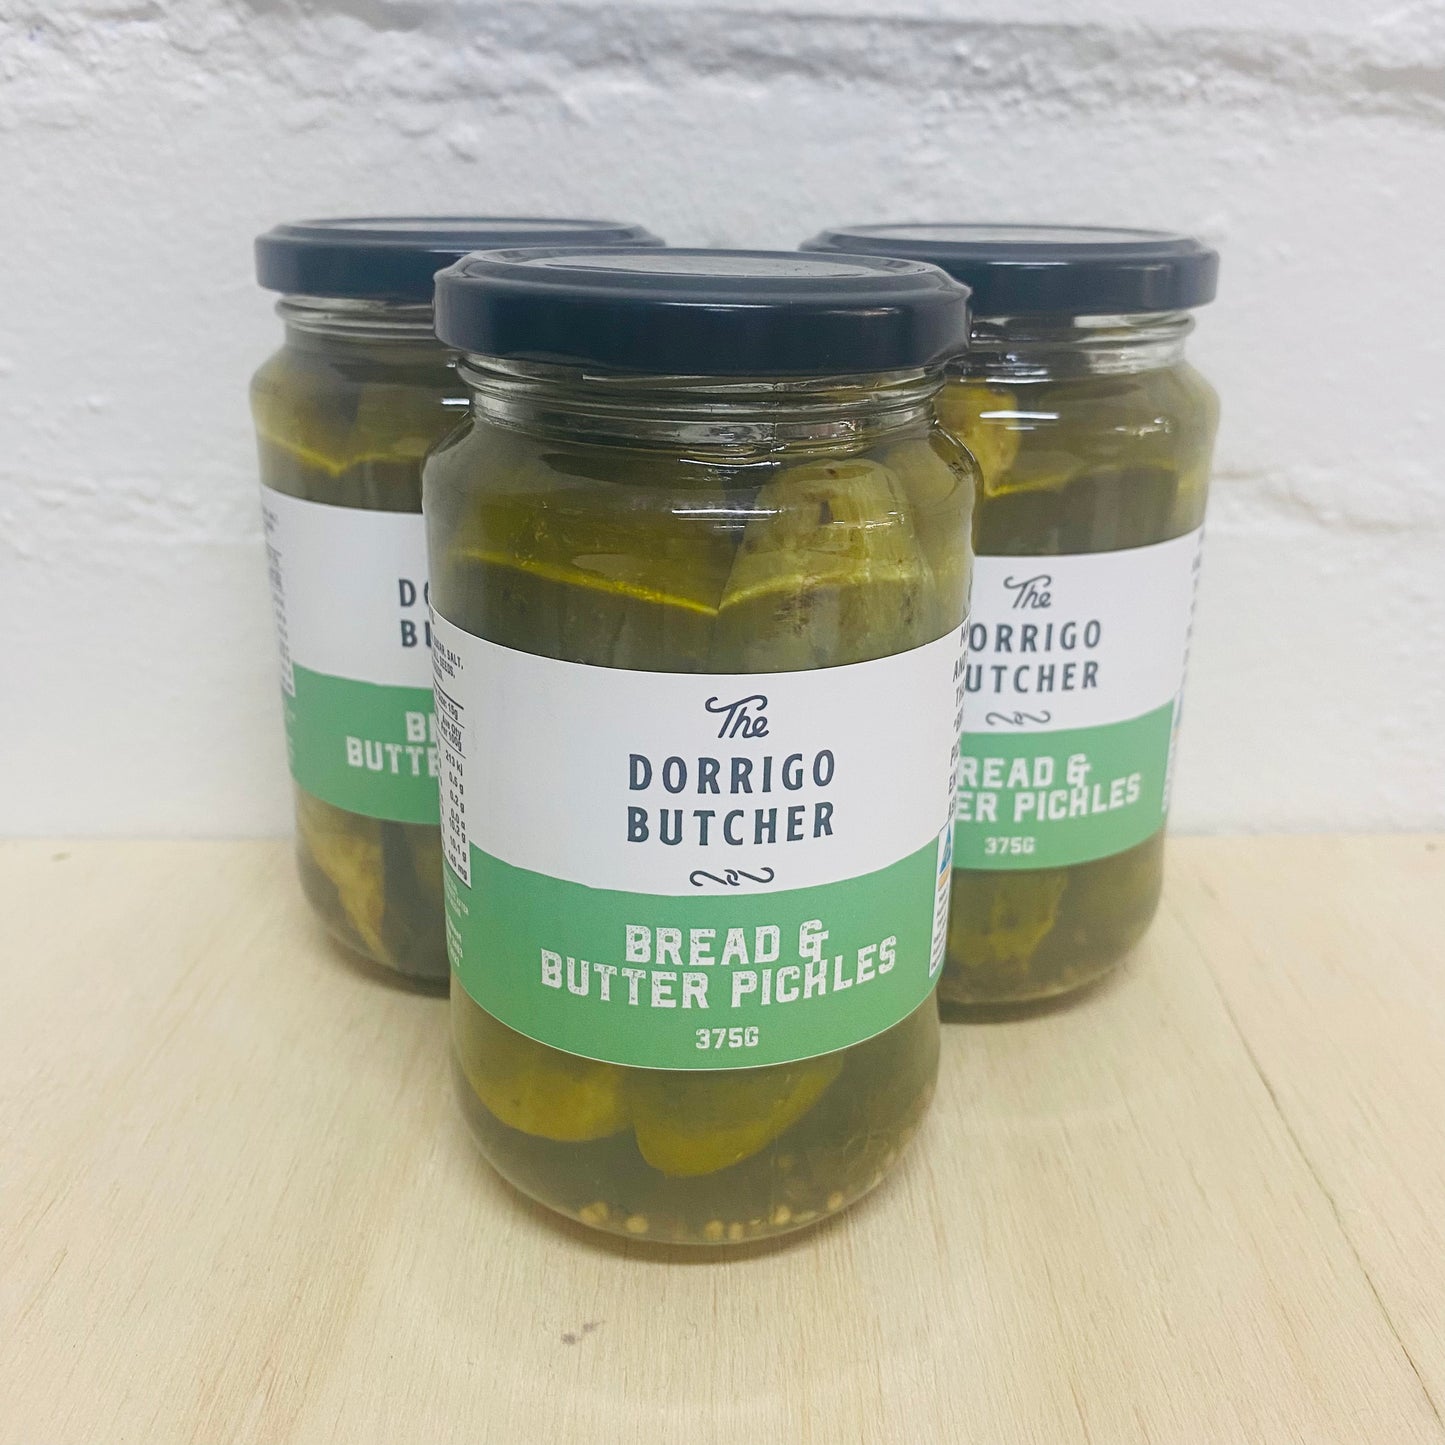 Bread & Butter Pickles by The Dorrigo Butcher 375g